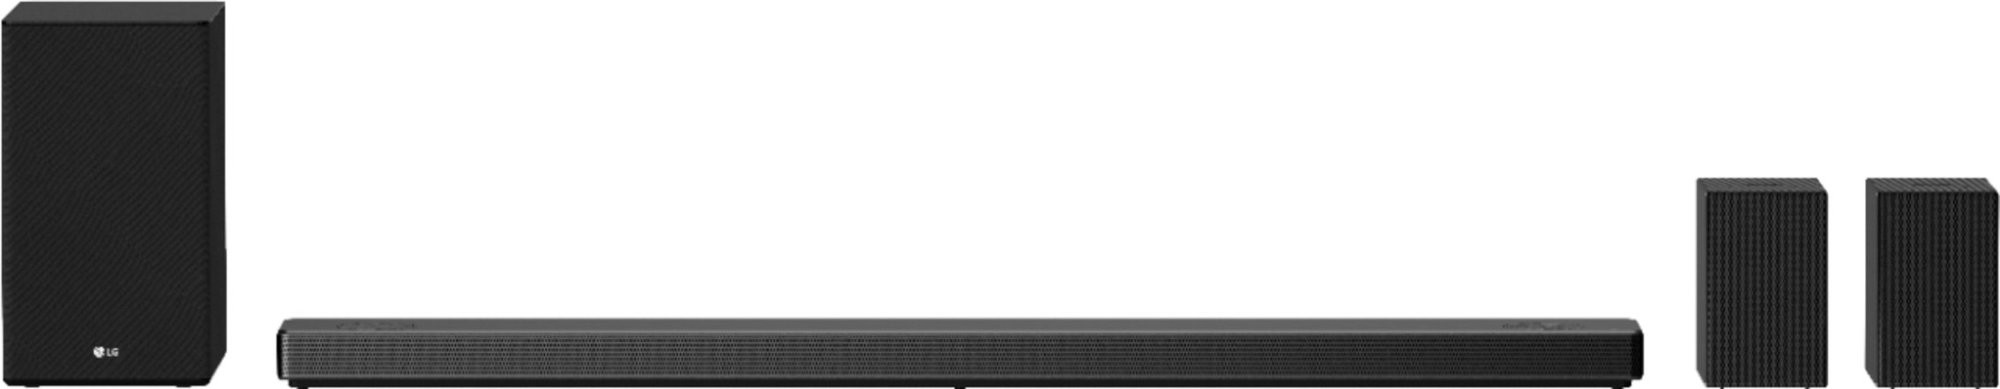 LG 7.1.4 Soundbar with Wireless Subwoofer and Surround Speakers SN11RG - U